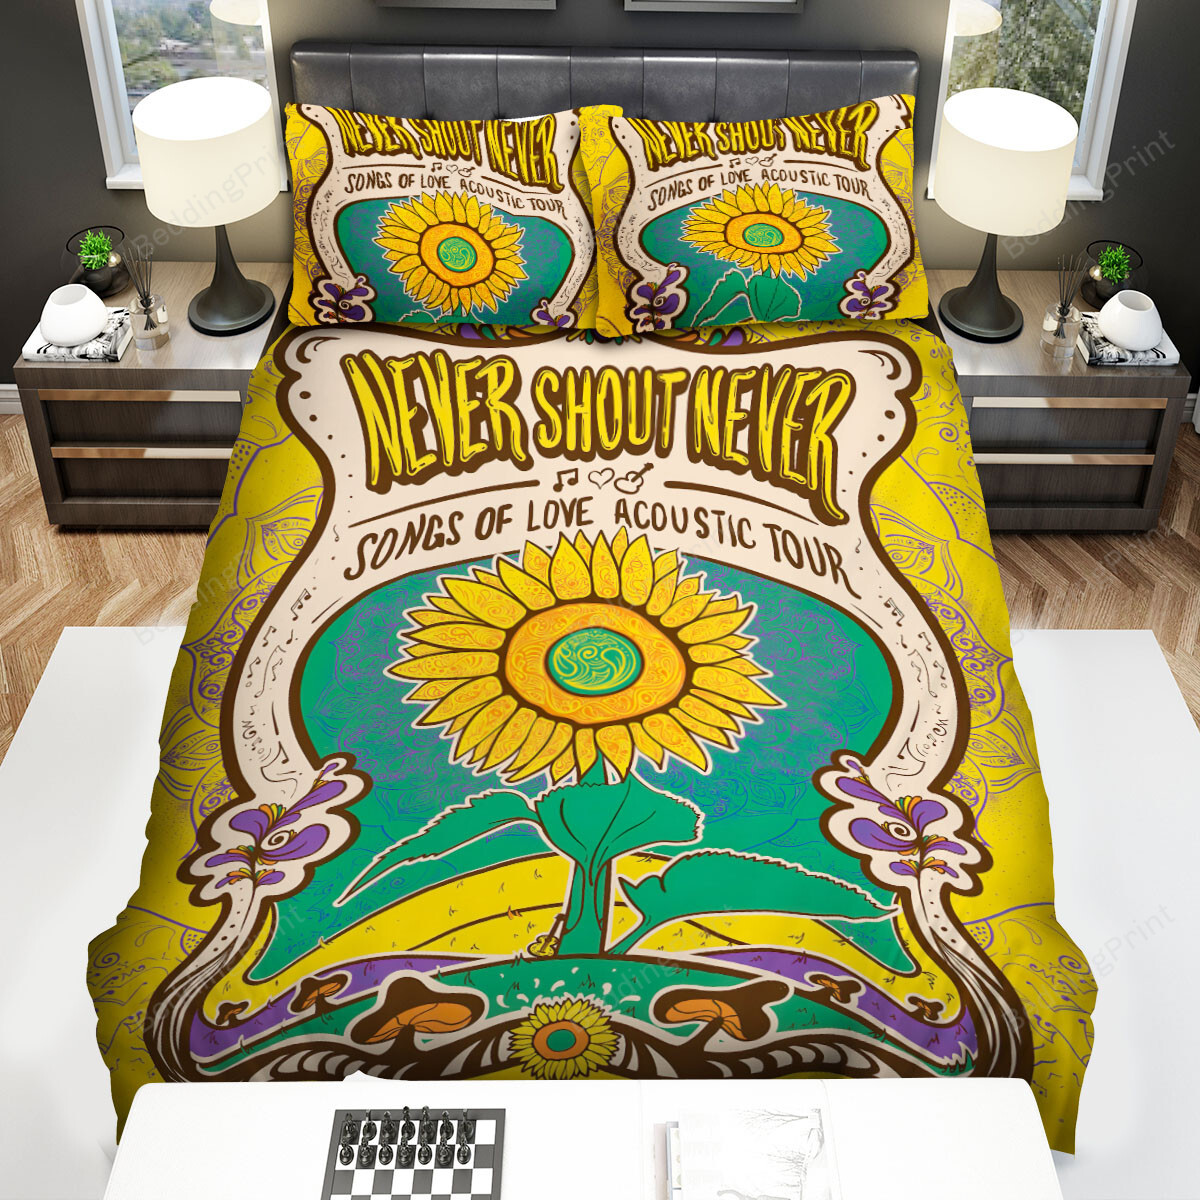 Never Shout Never Acoustic Tour Bed Sheets Spread Comforter Duvet Cover Bedding Sets